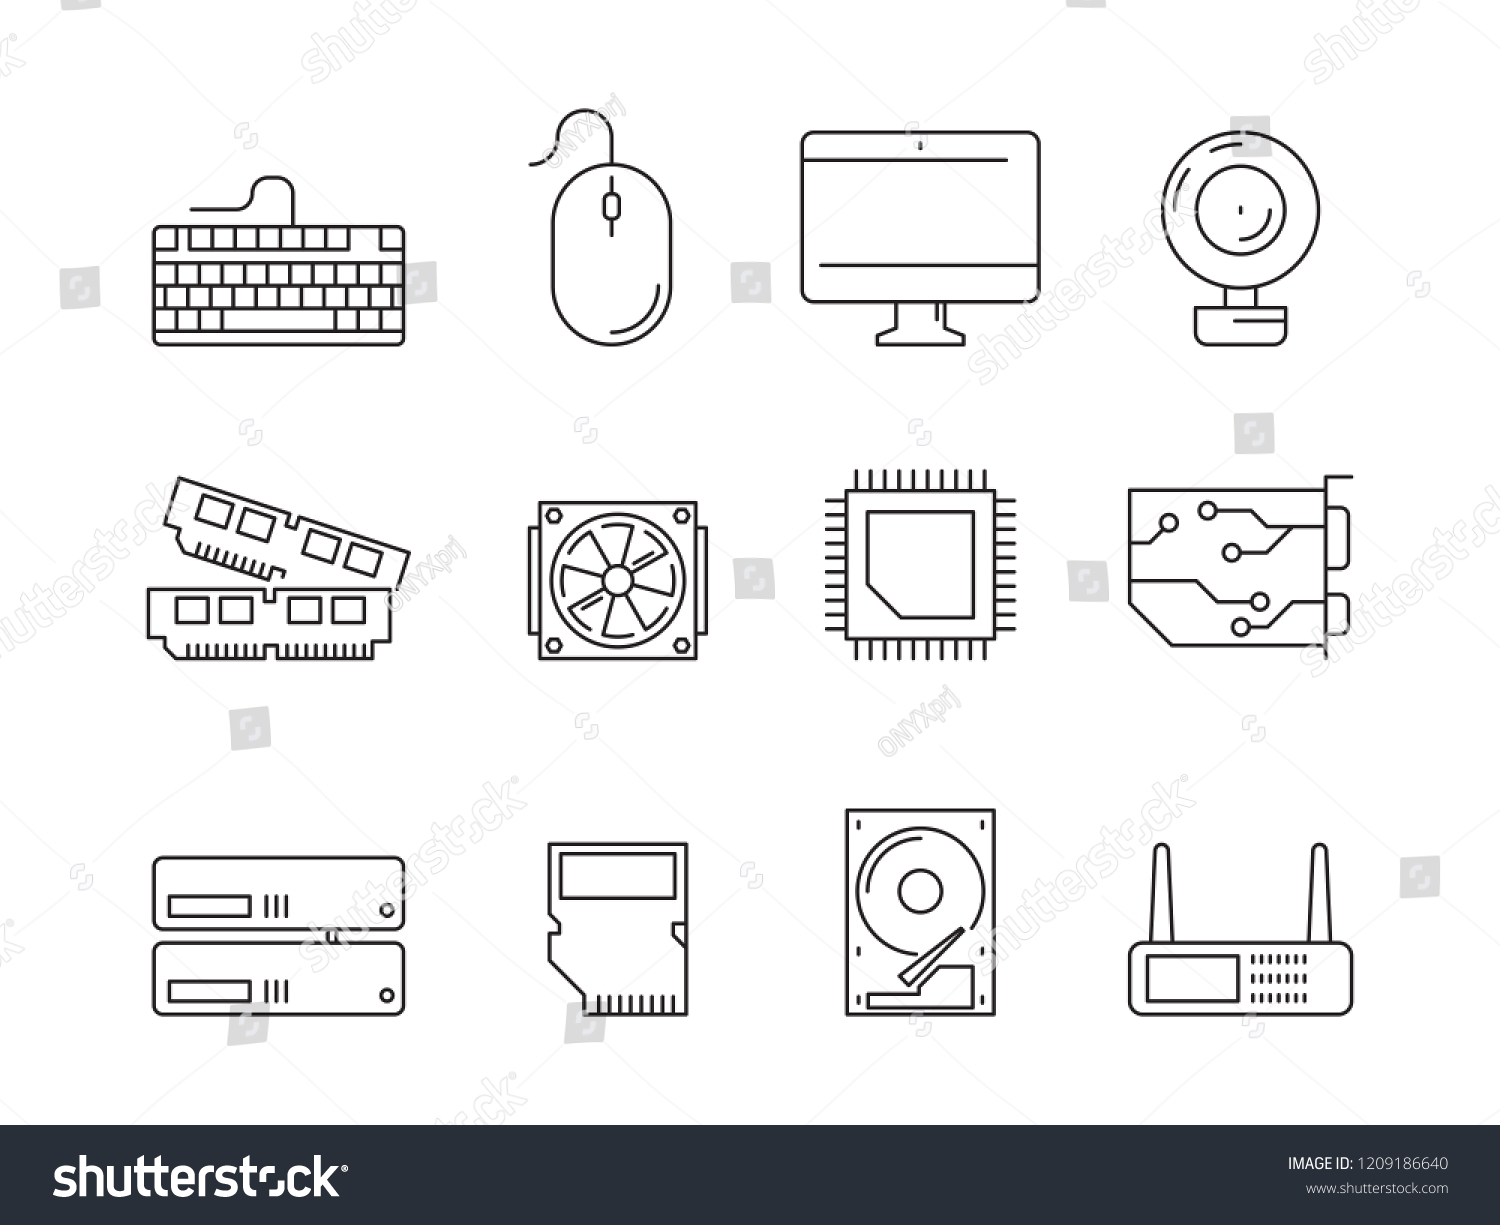 Components Icons Ssd Cpu: vector de stock (libre de 1209186640 | Shutterstock